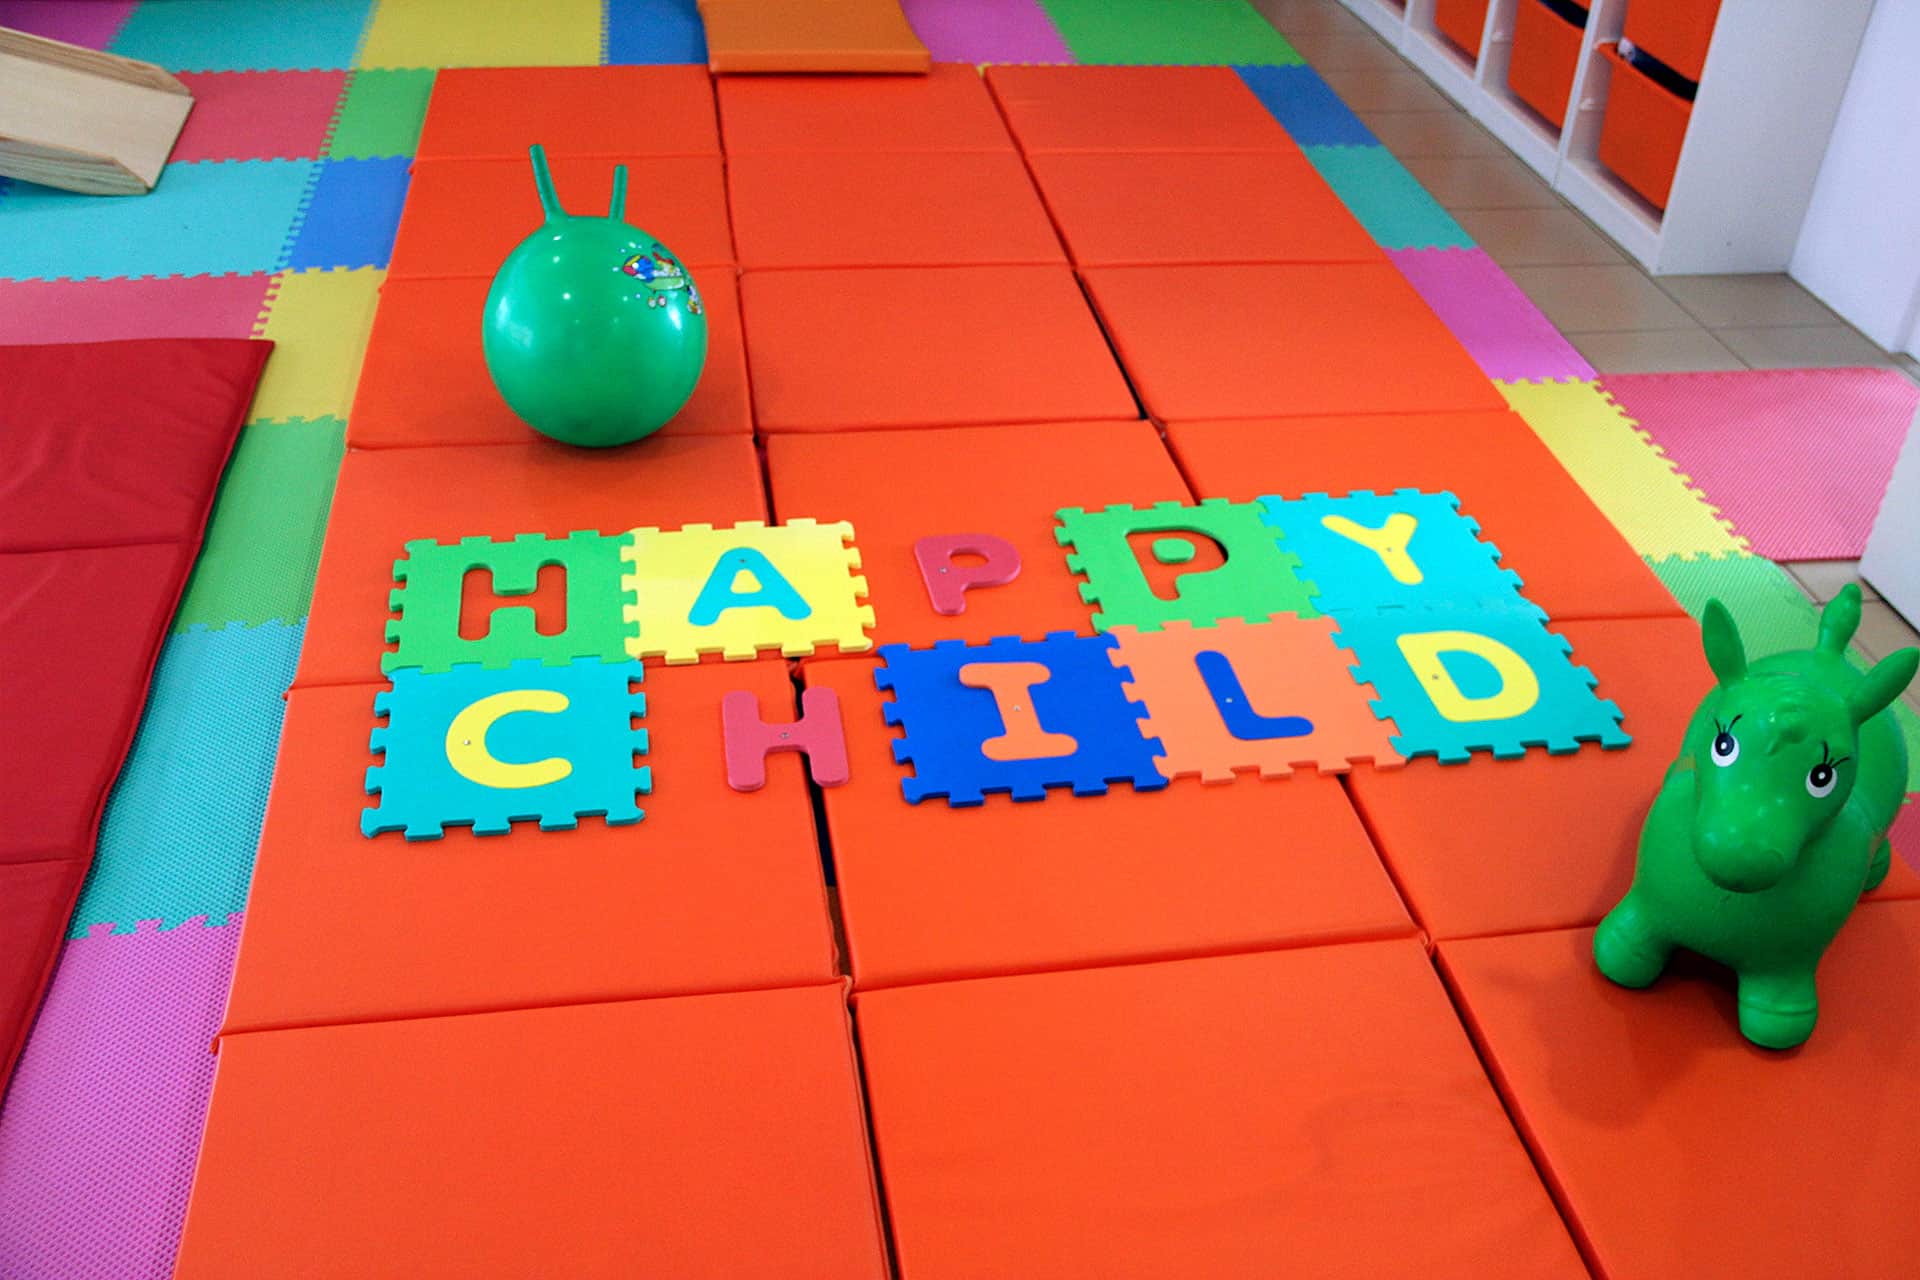 Tapetes coloridos no chão, puzzle de letras e brinquedos no Centro Happy Child.